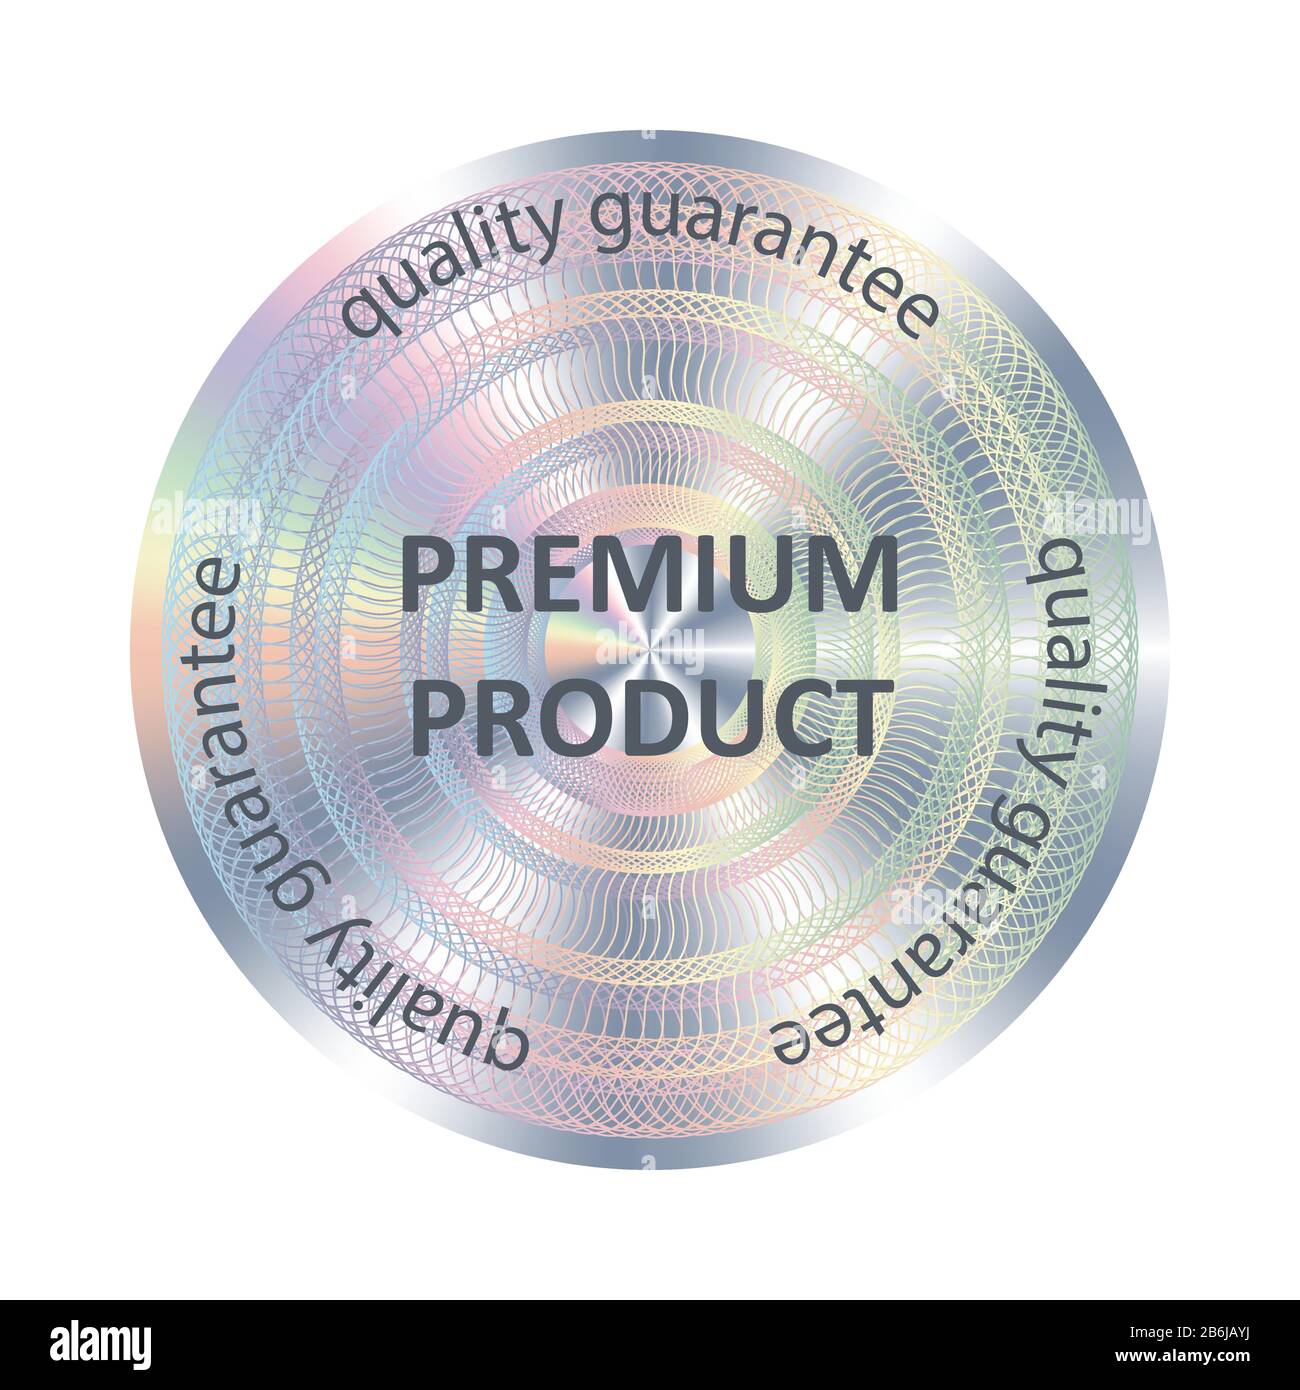 Premium product round hologram sticker. Stock Vector